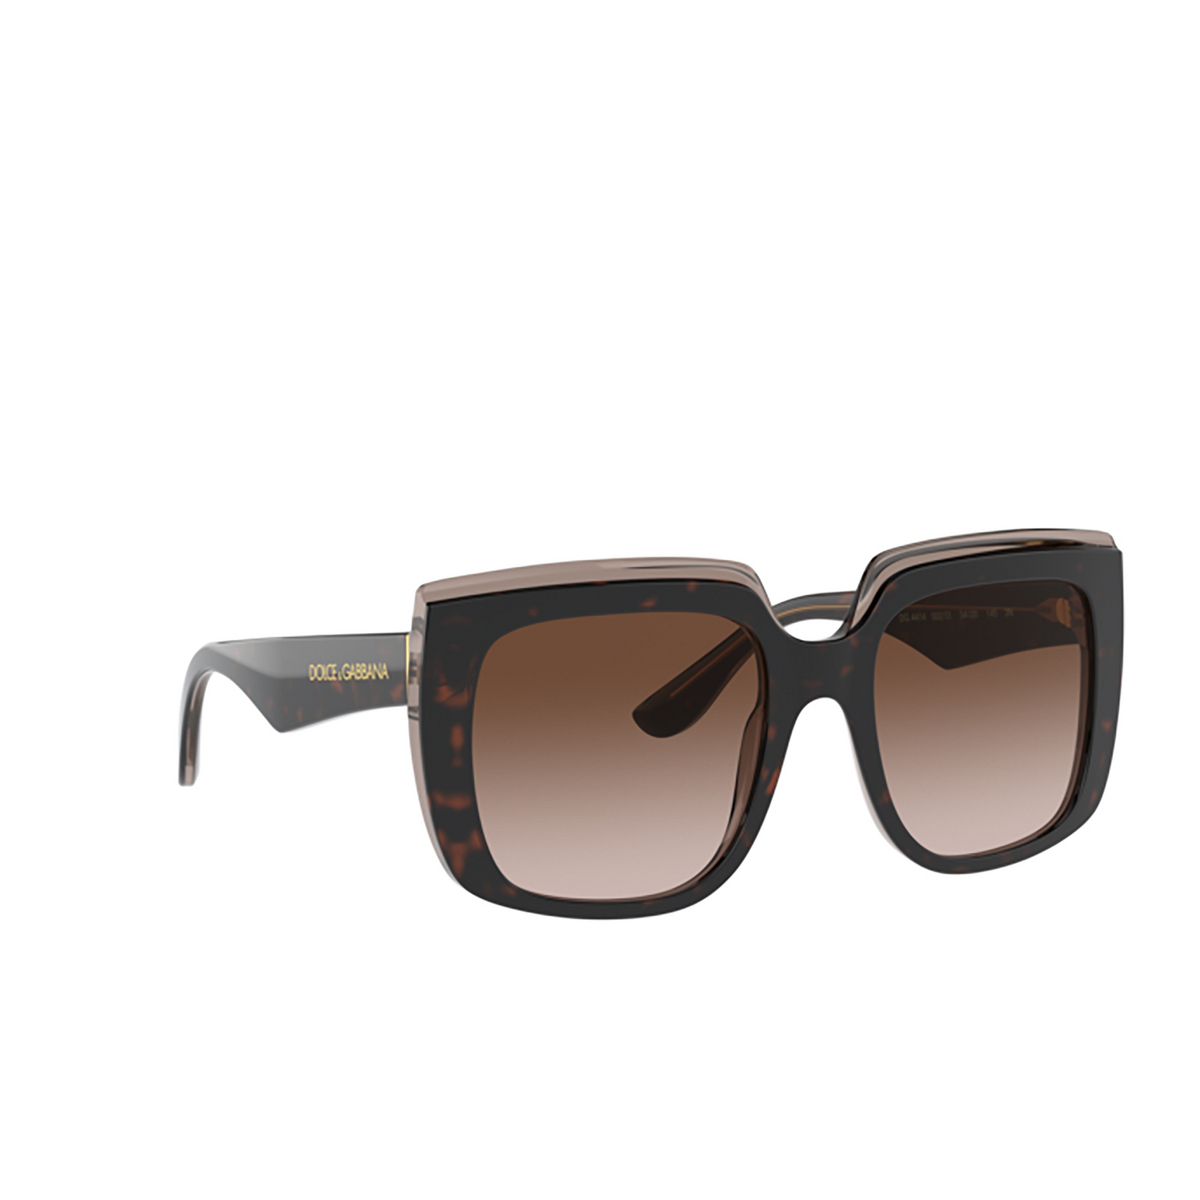 Dolce & Gabbana DG4414 Sunglasses 502/13 Havana on transparent brown - three-quarters view